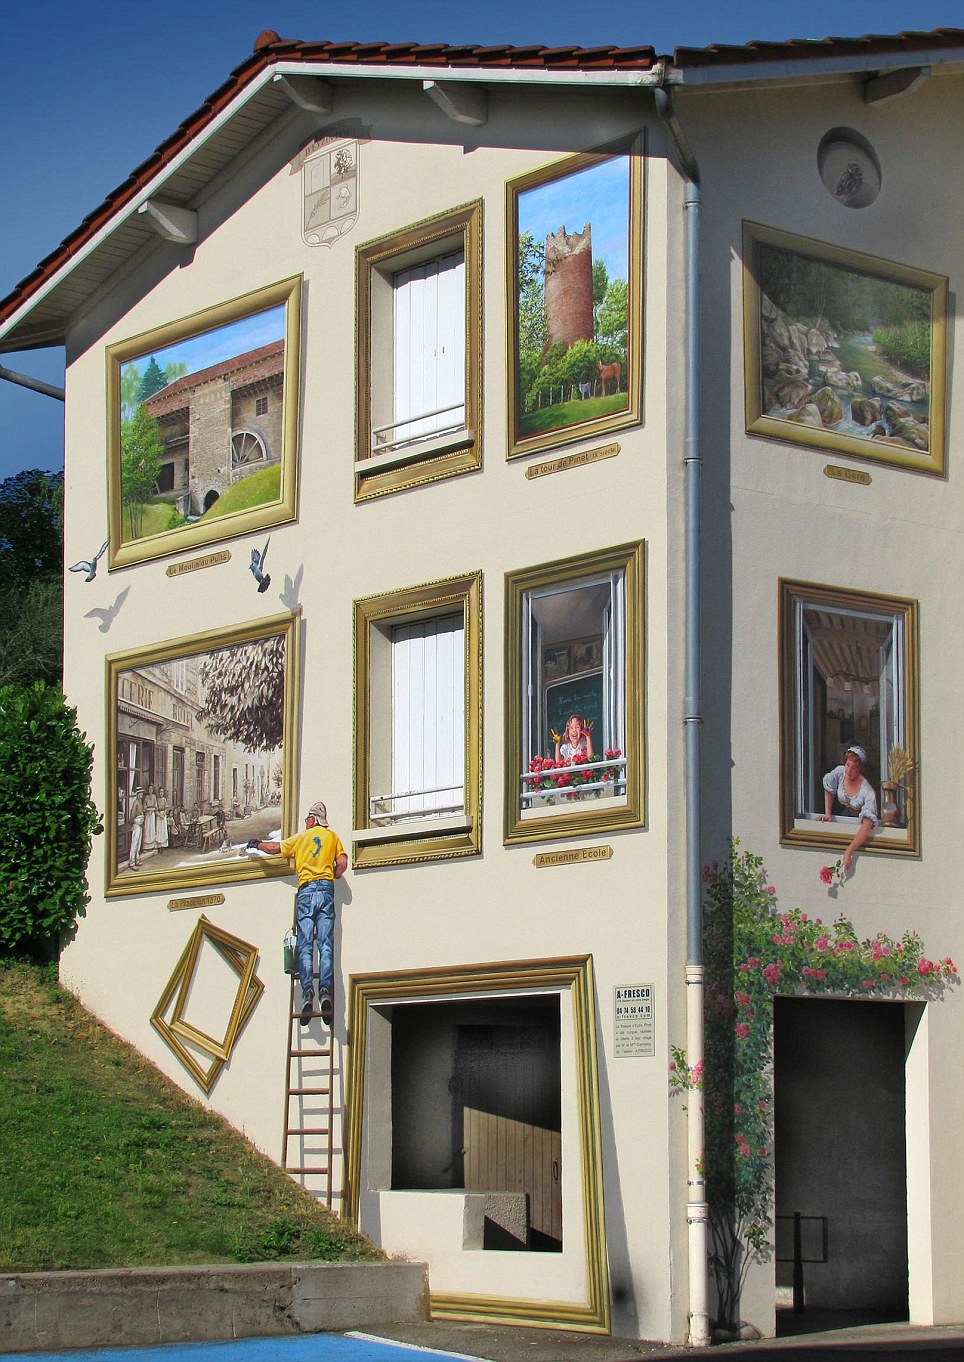 hyper-realistic facades